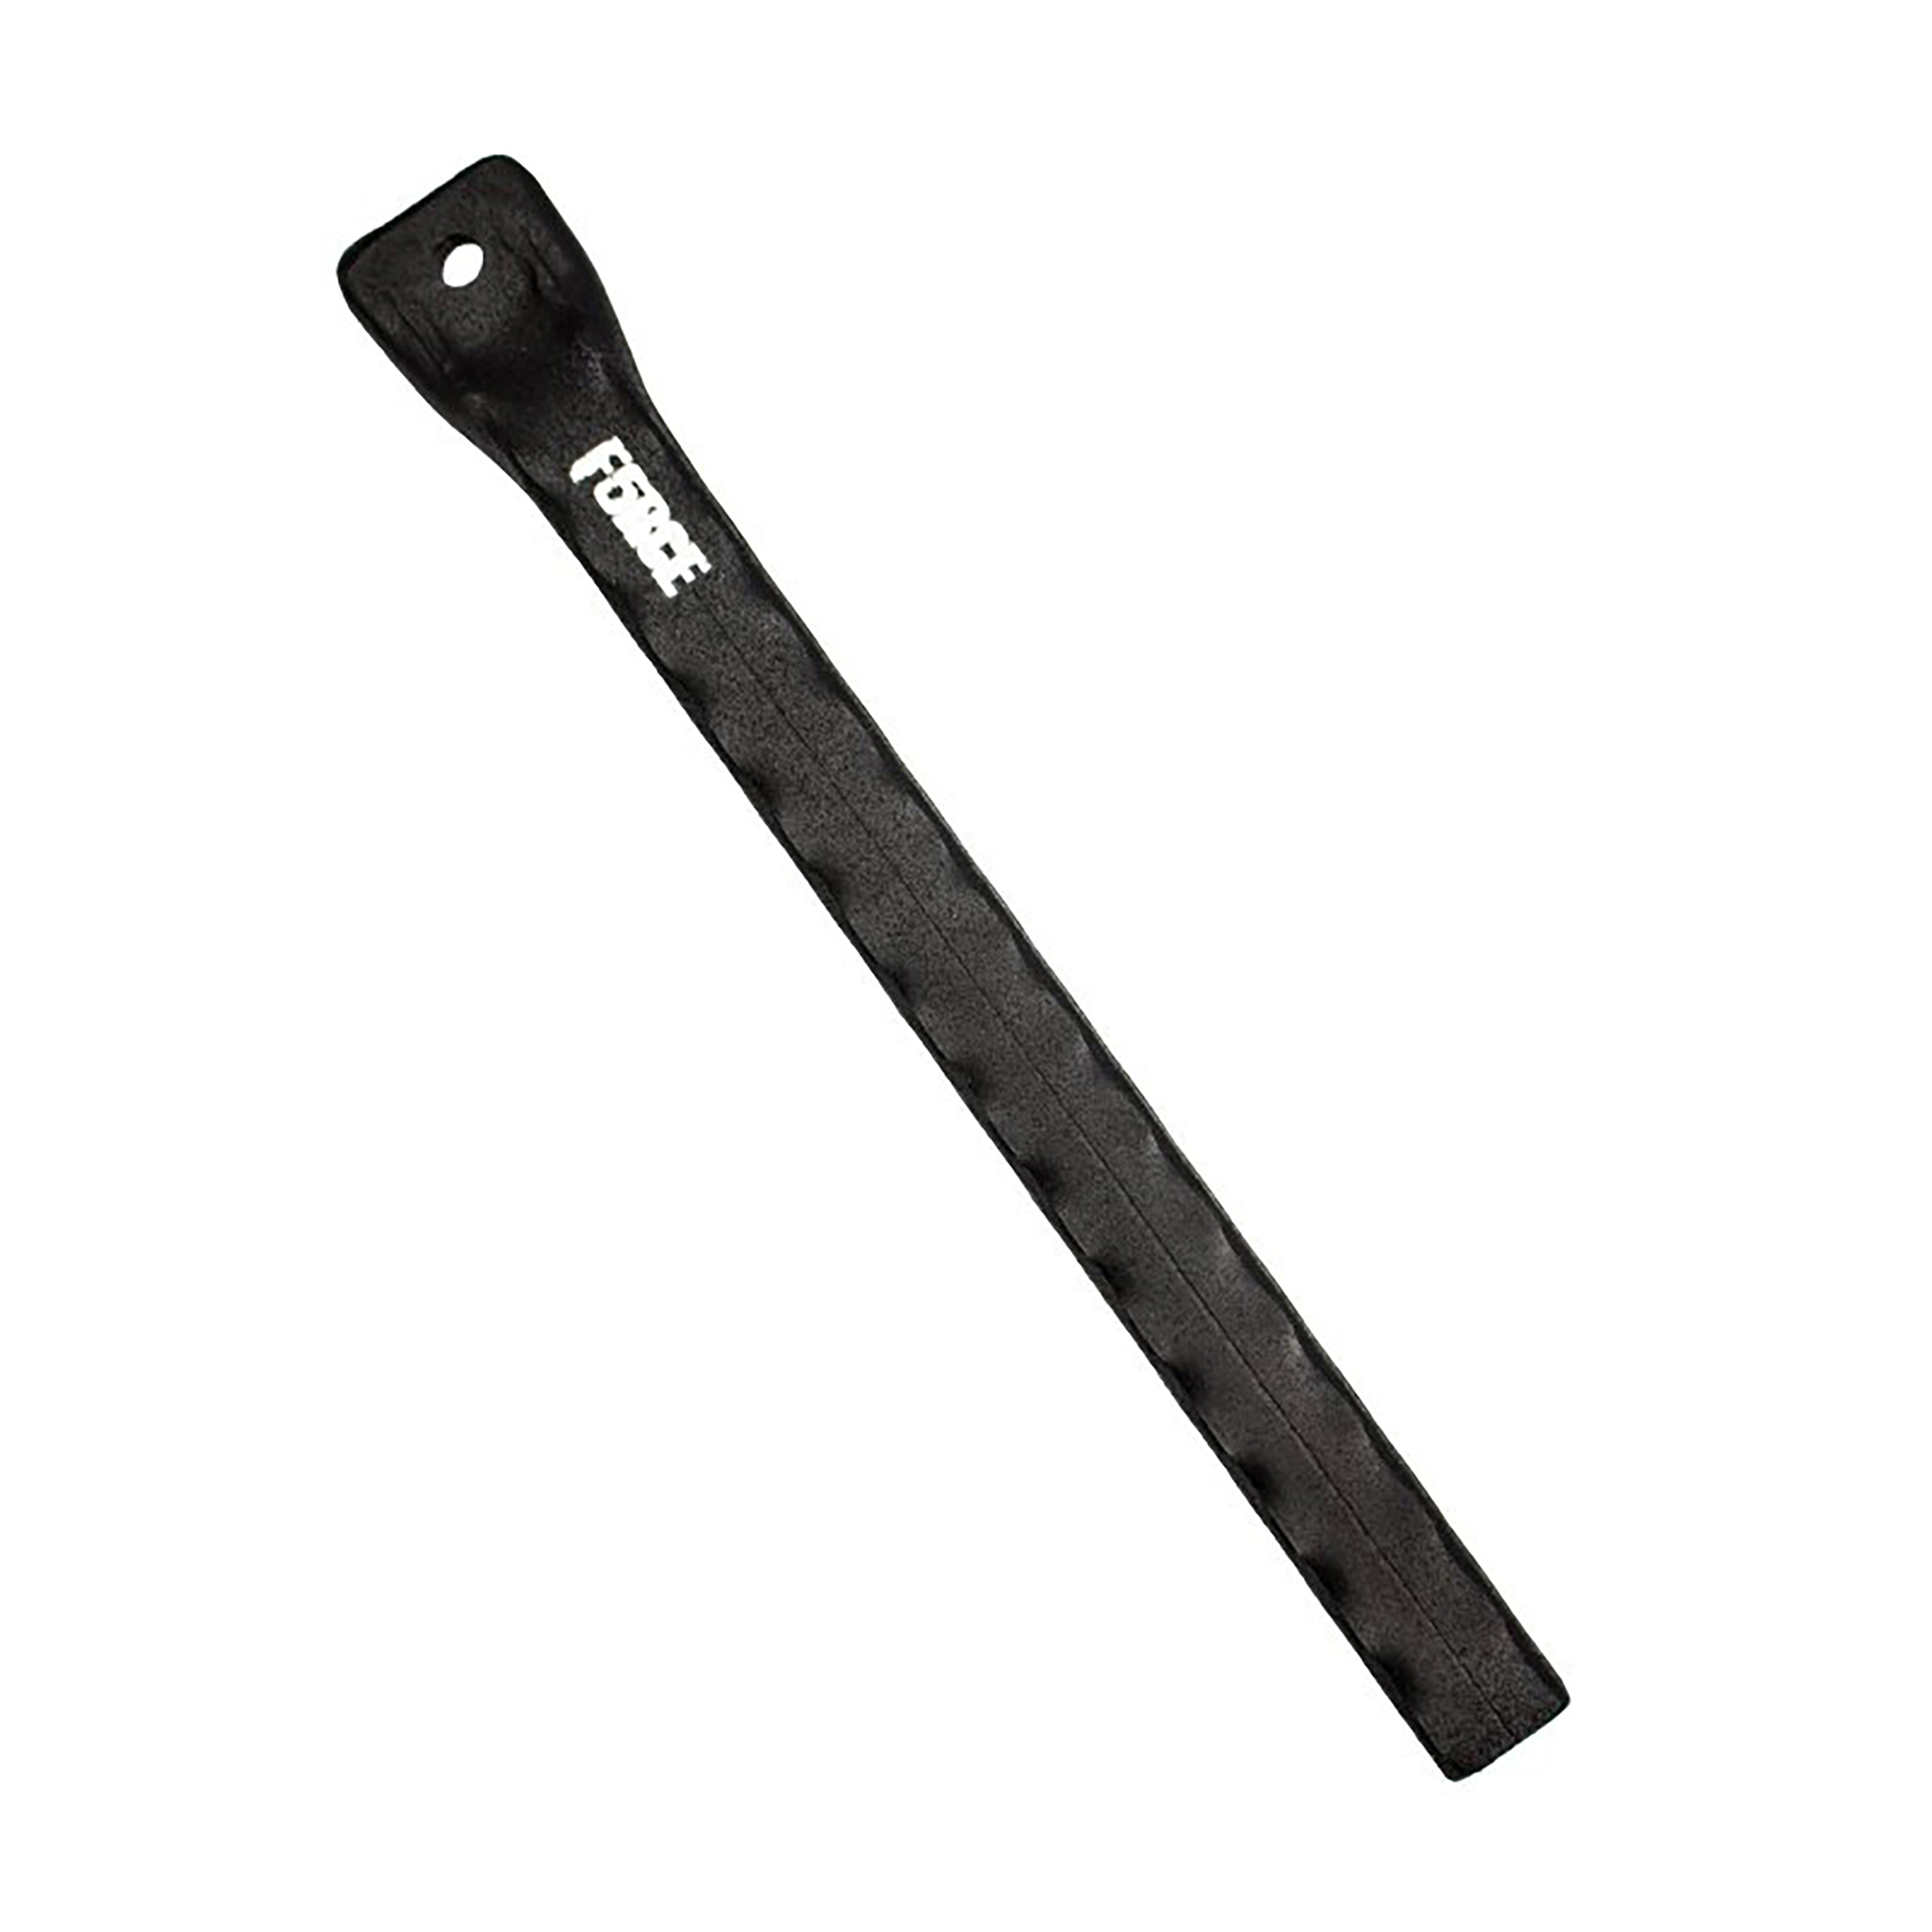 Force5 Blacksmith Stick OCR Greb